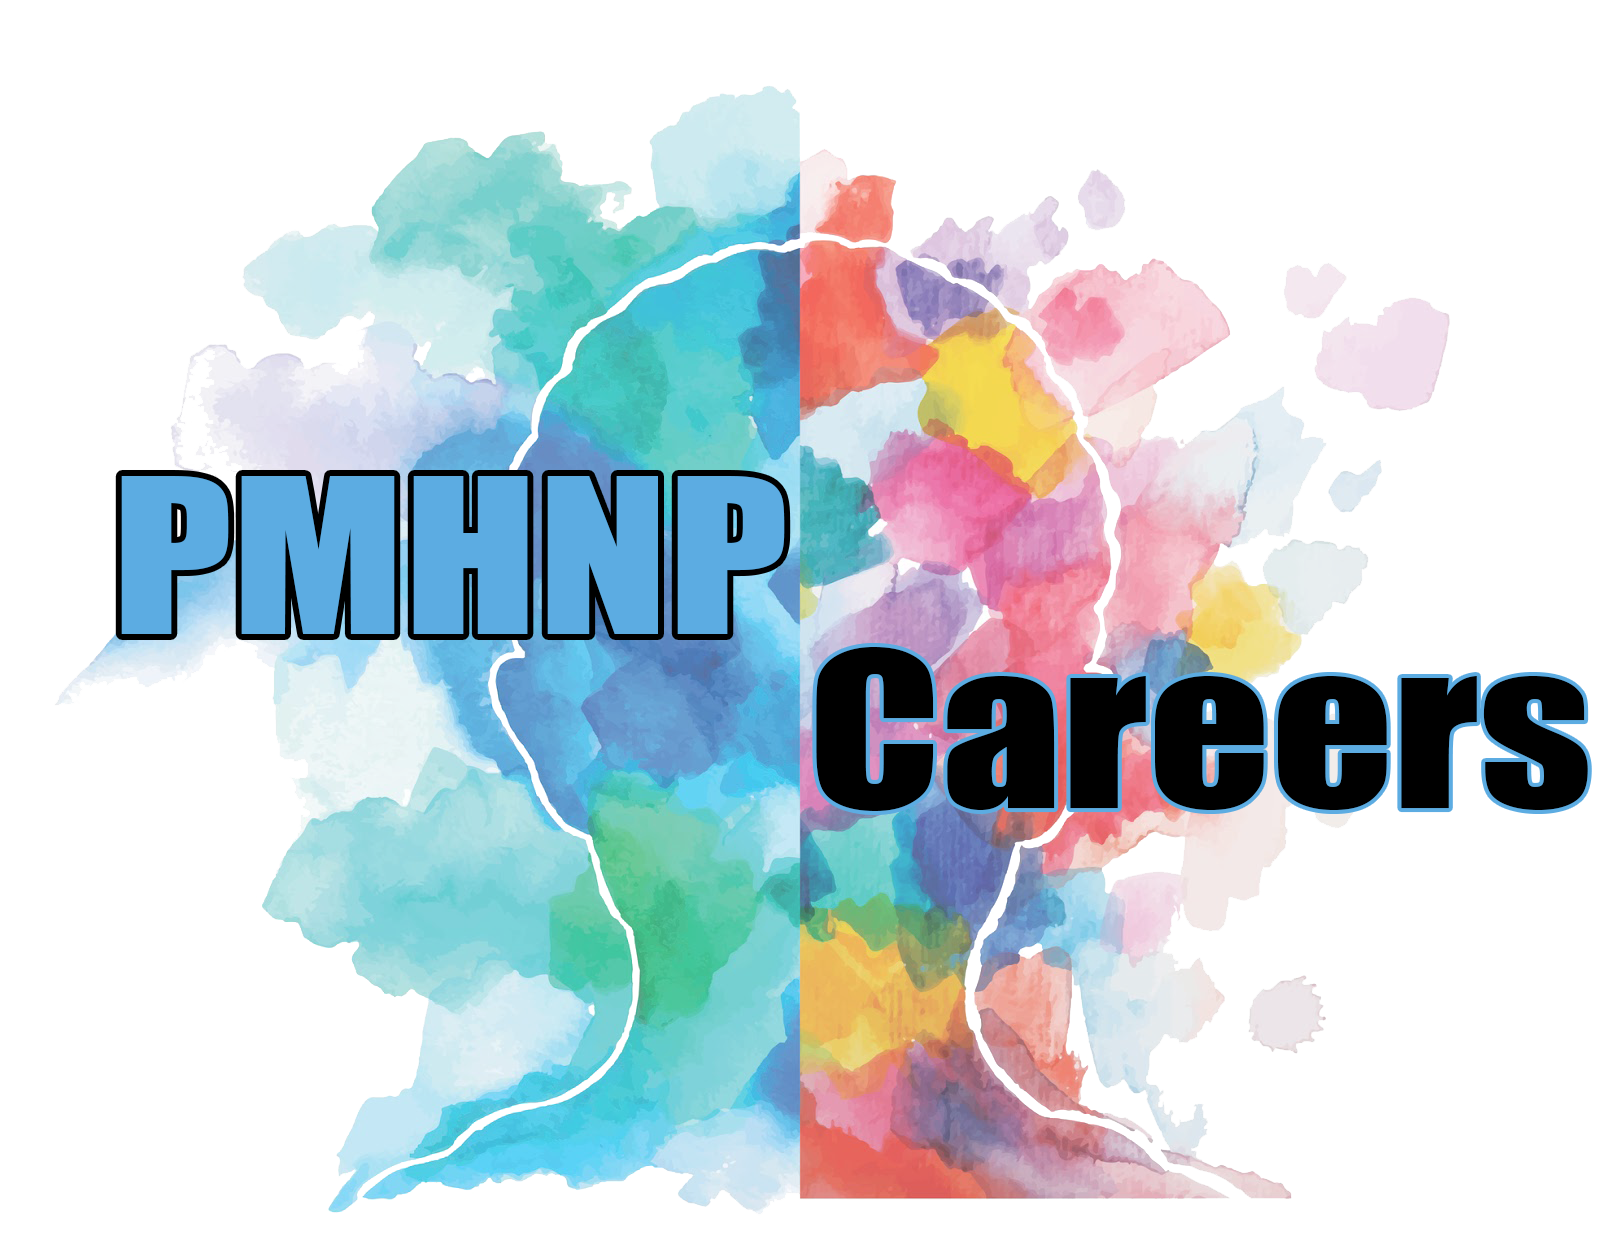 PMHNP Careers logo